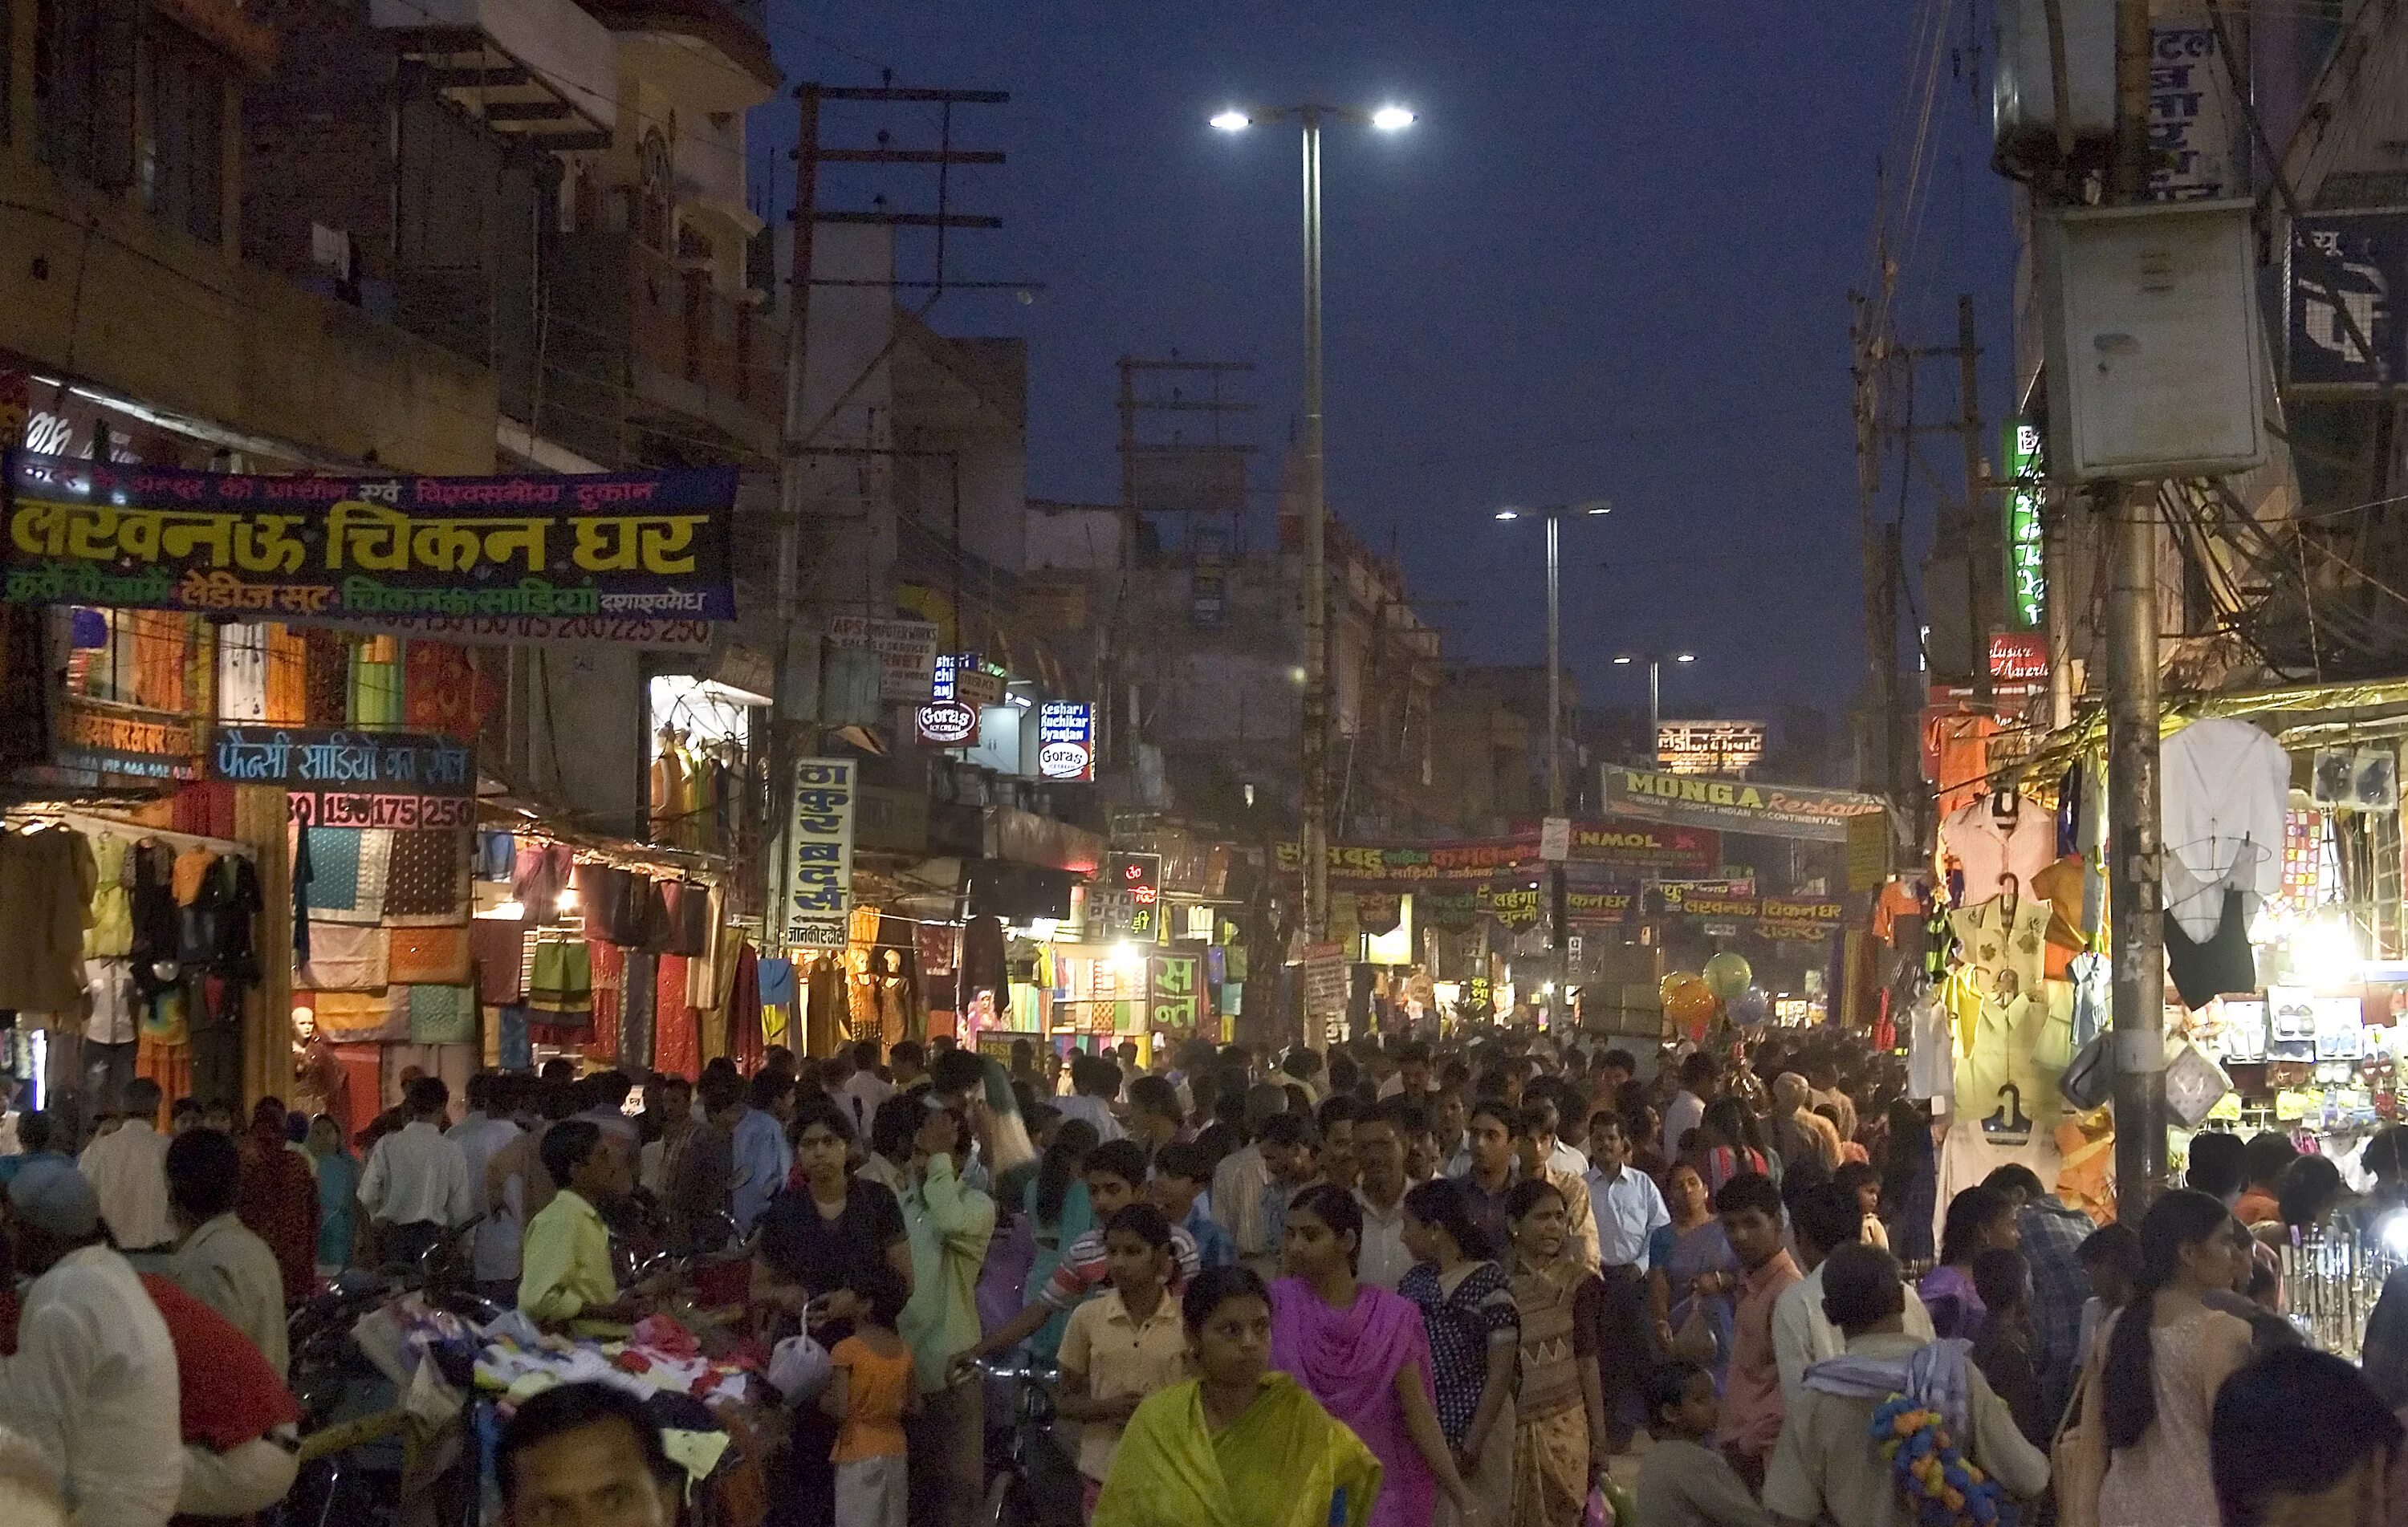 Public commons. Индия улицы. Индия фото улиц. Индия улицы ночь. Улицы Индии HD.